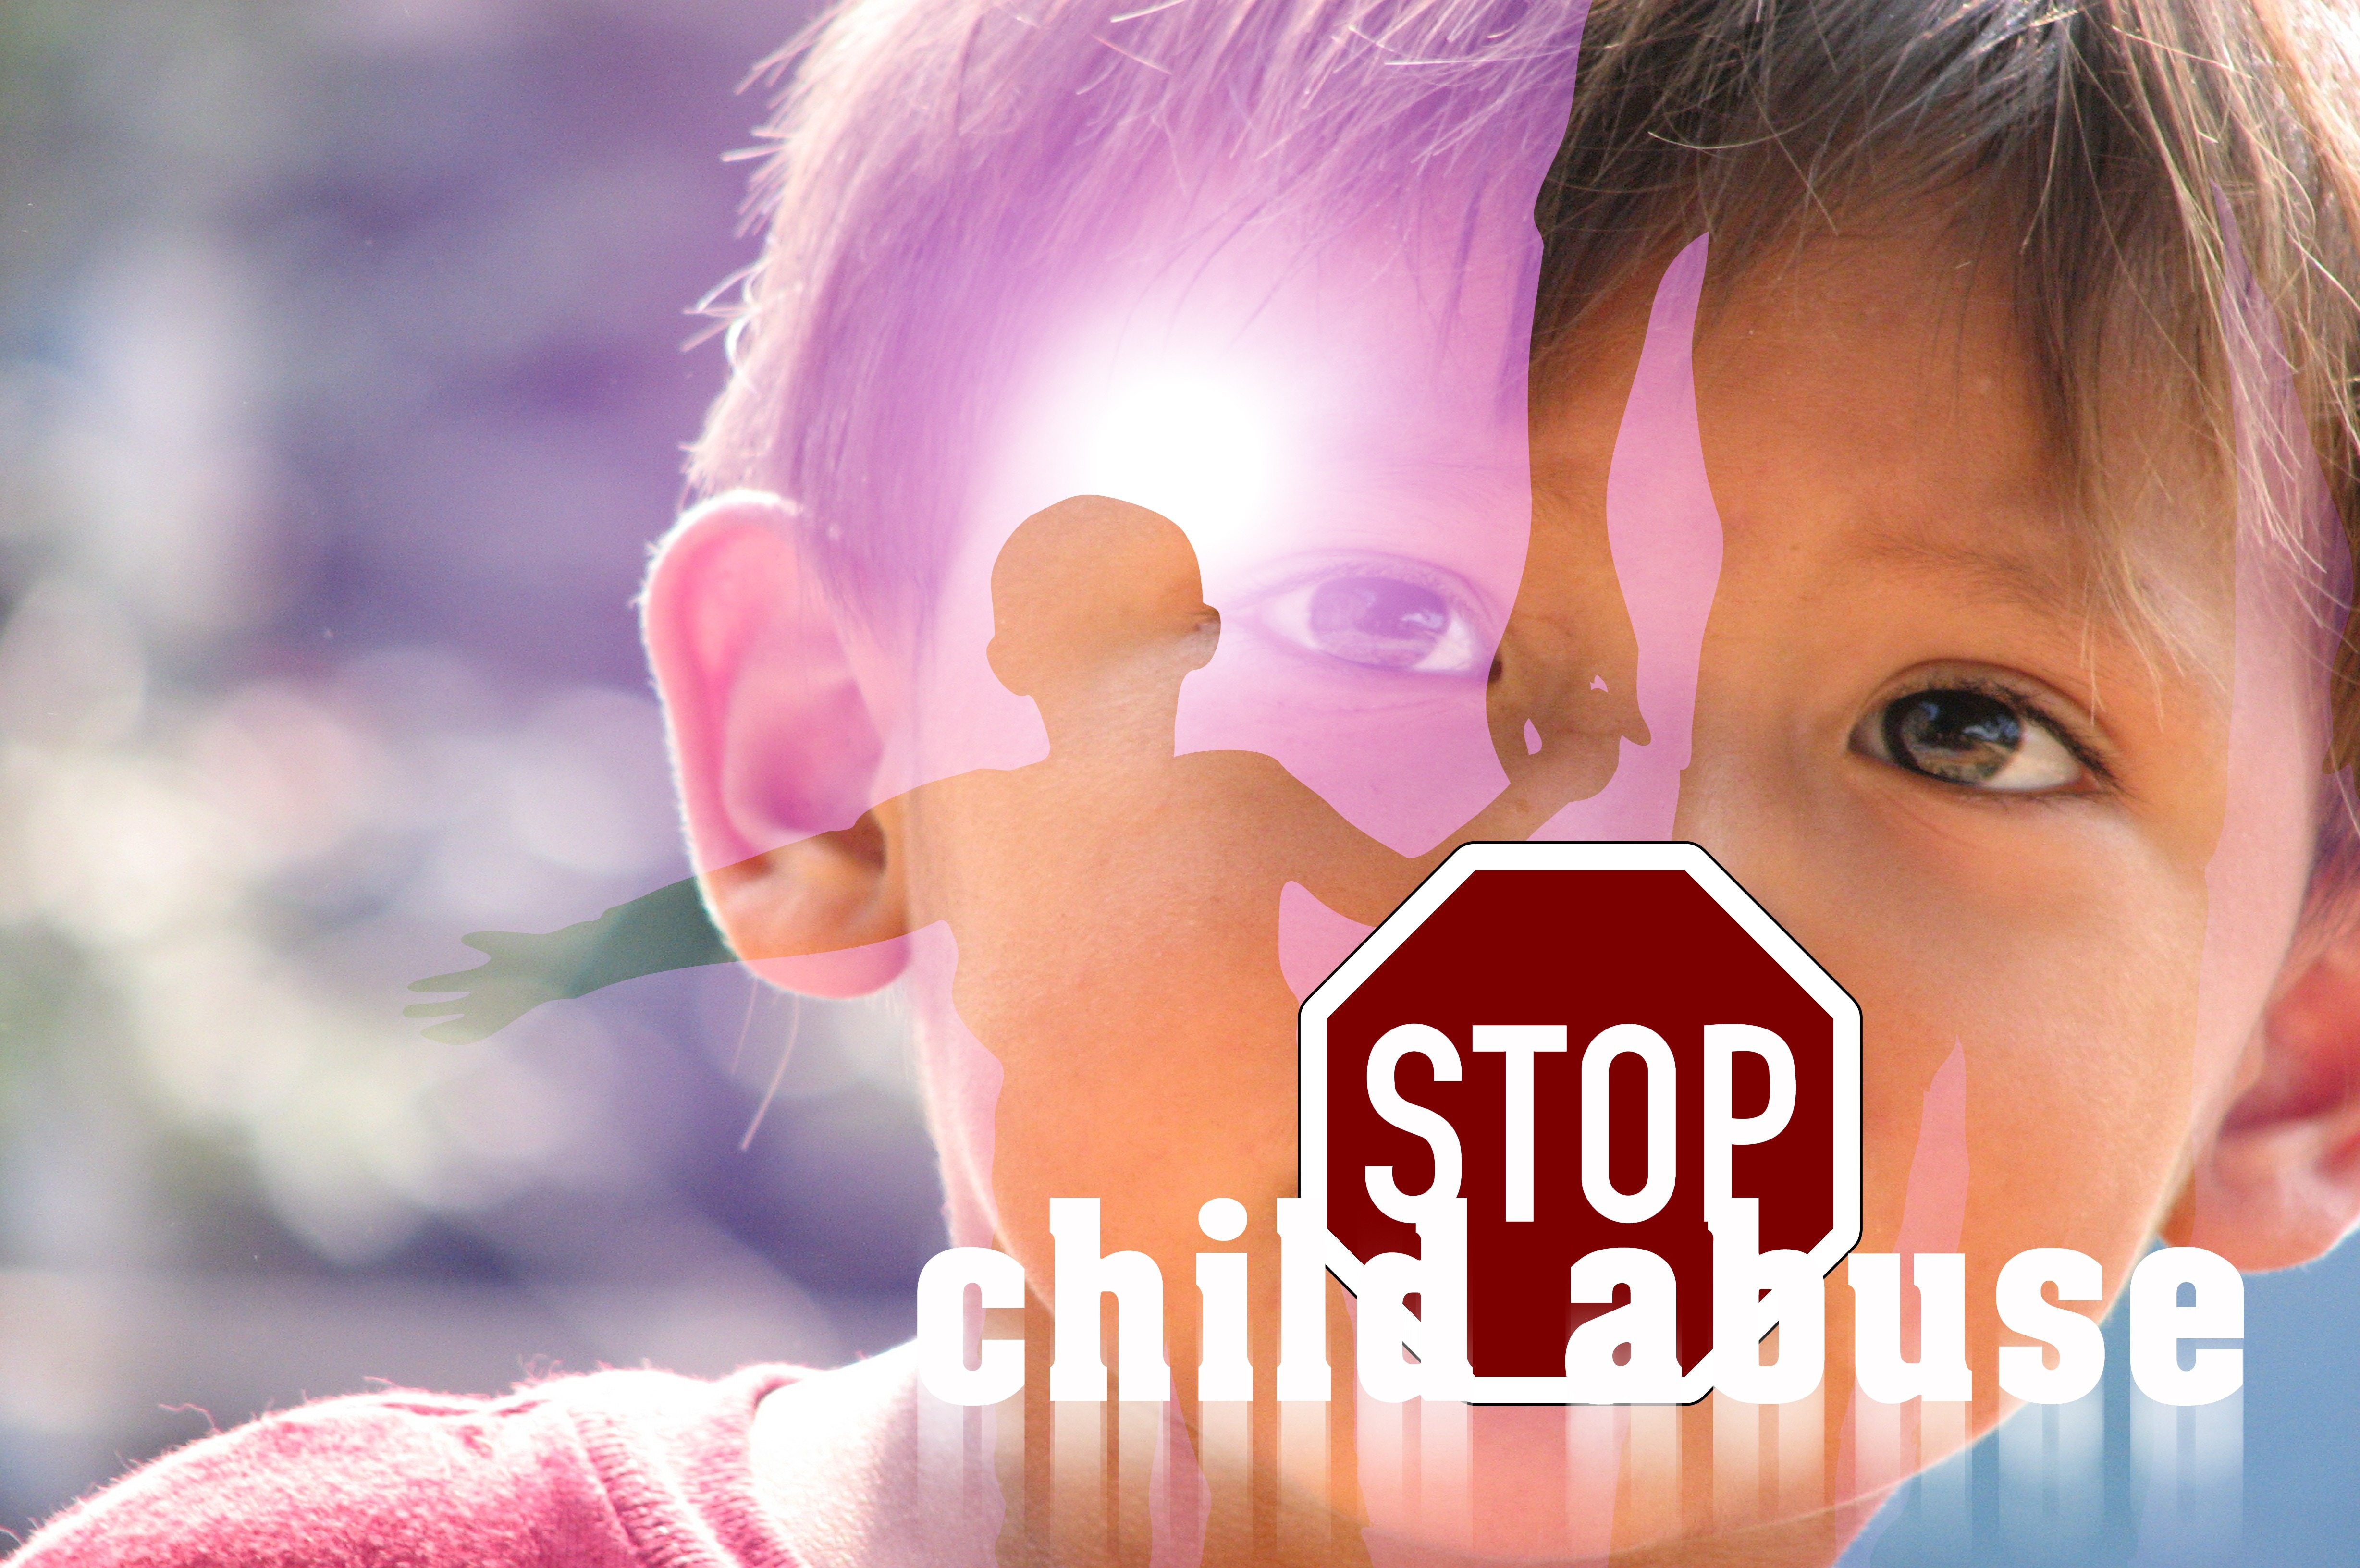 stop child abuse illustration